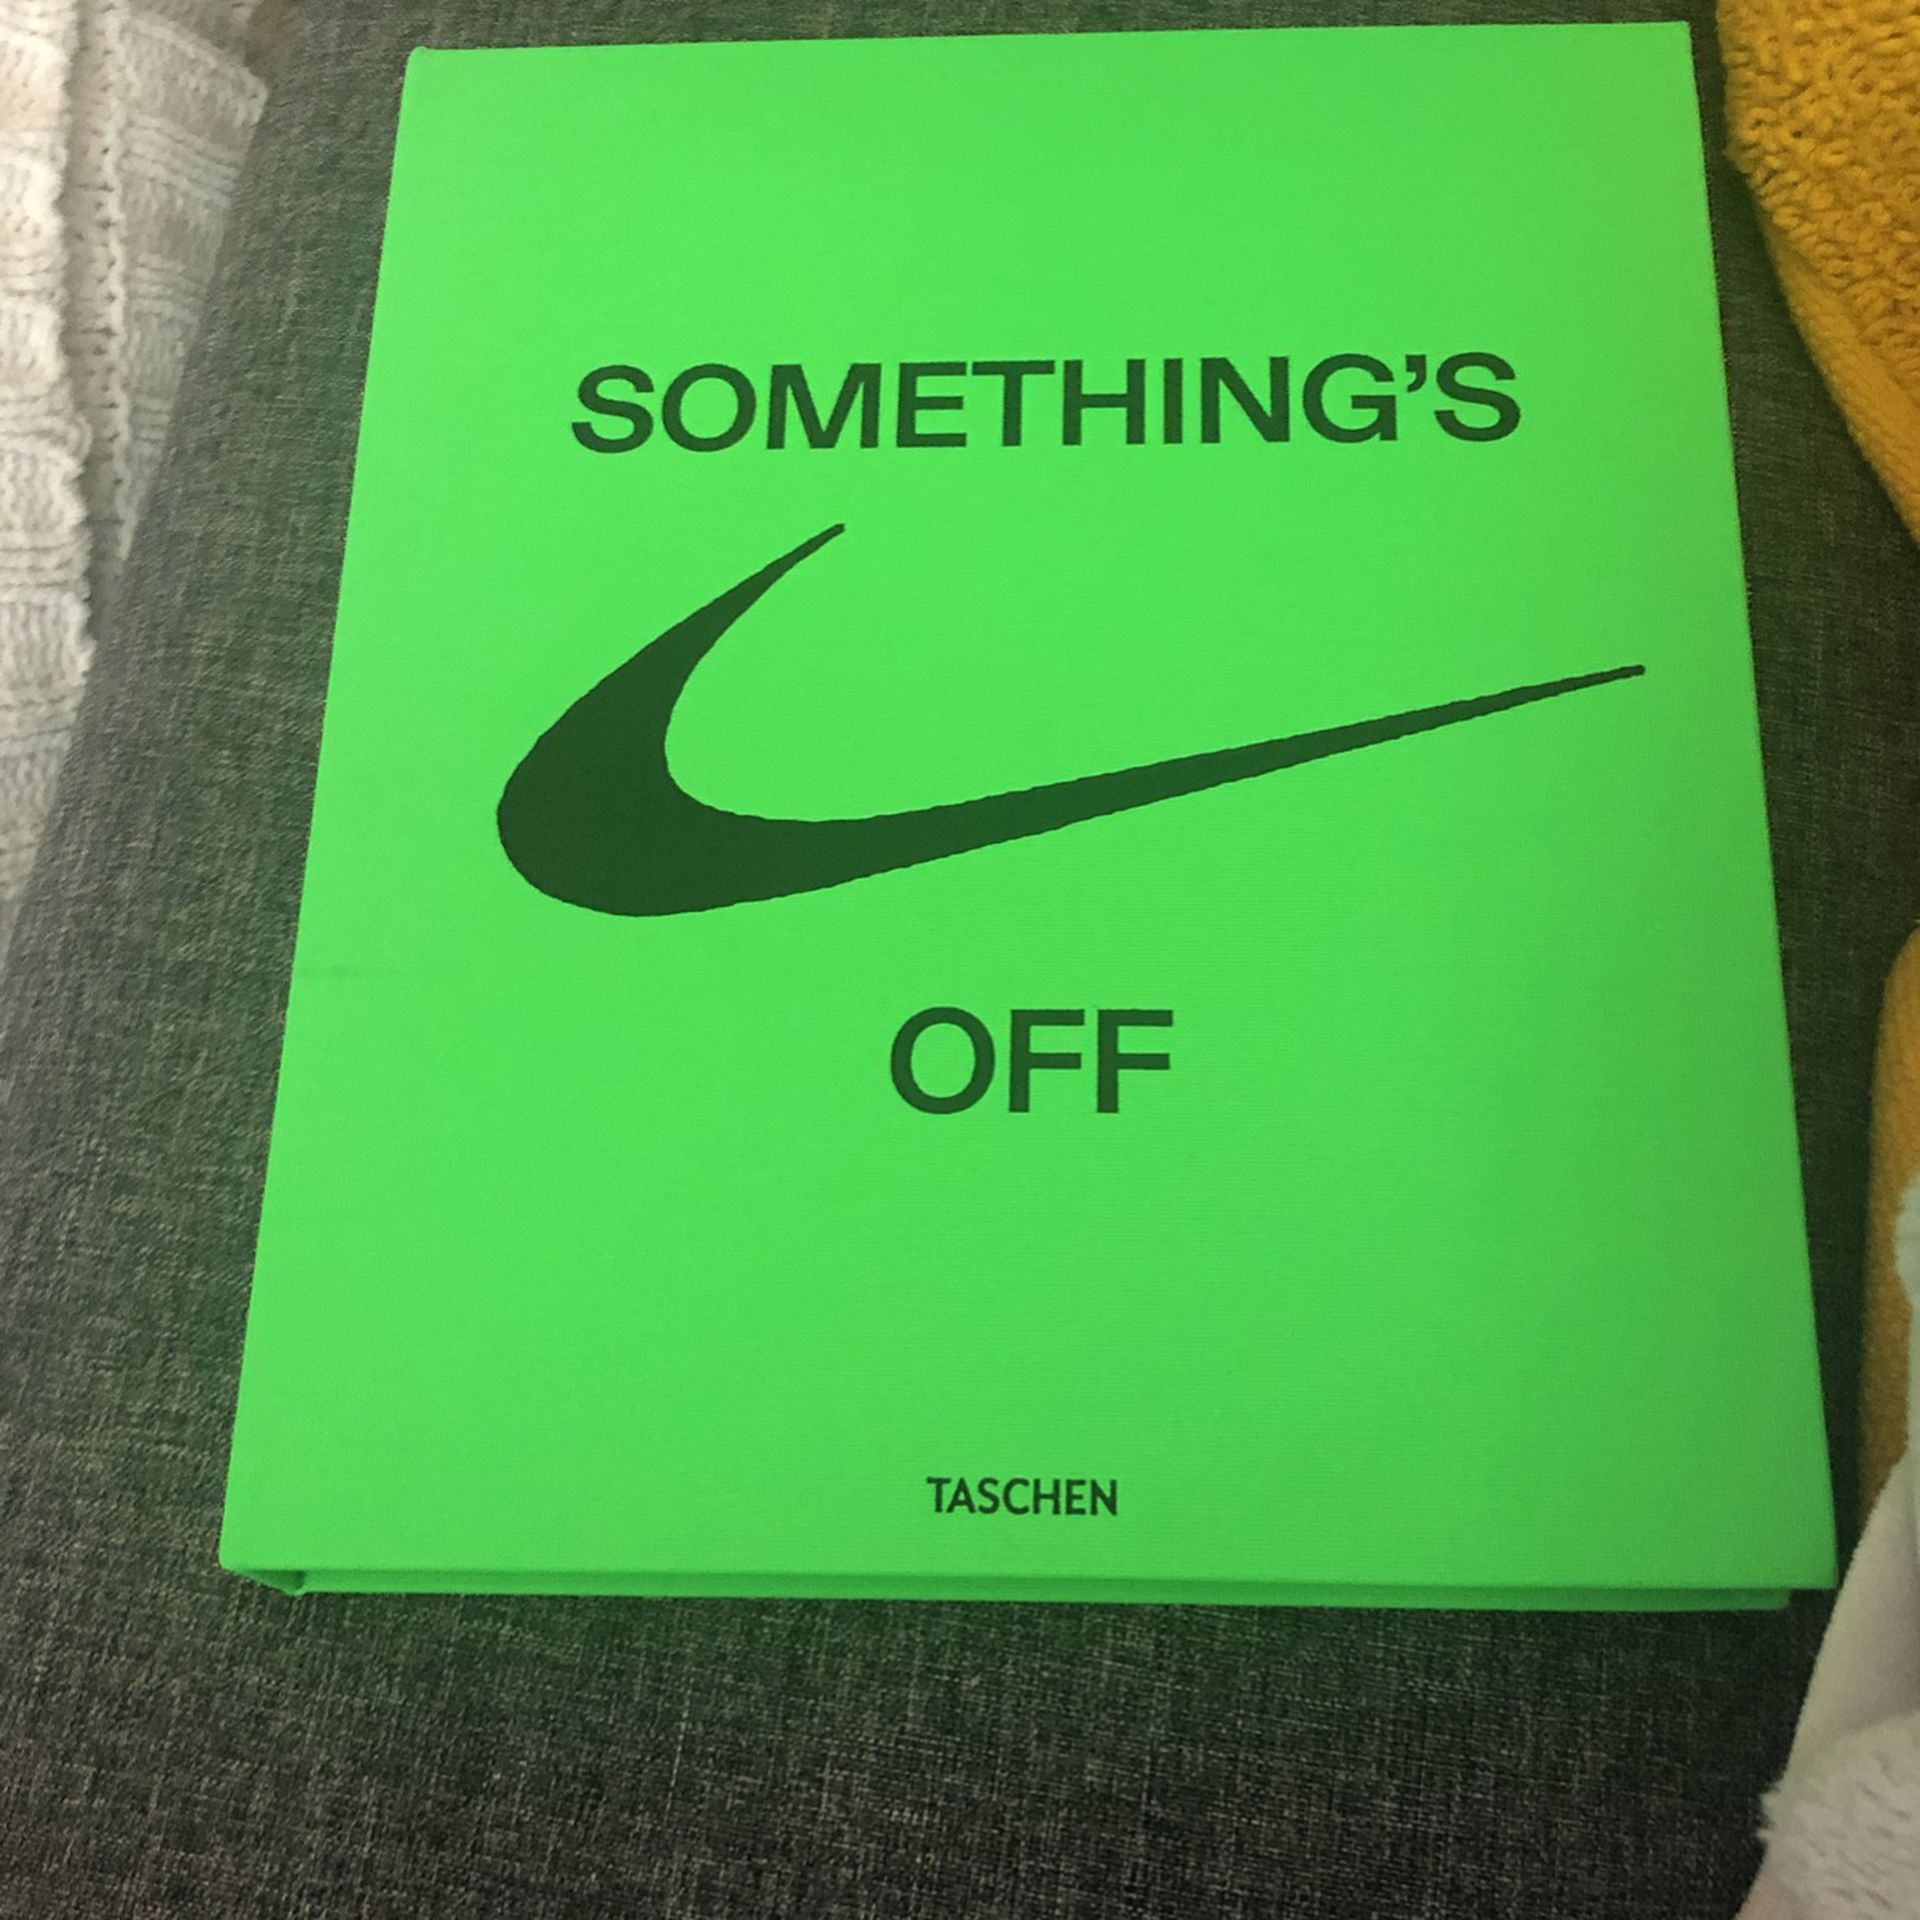 Nike Virgil Abloh Taschen ICONS Book Release Info